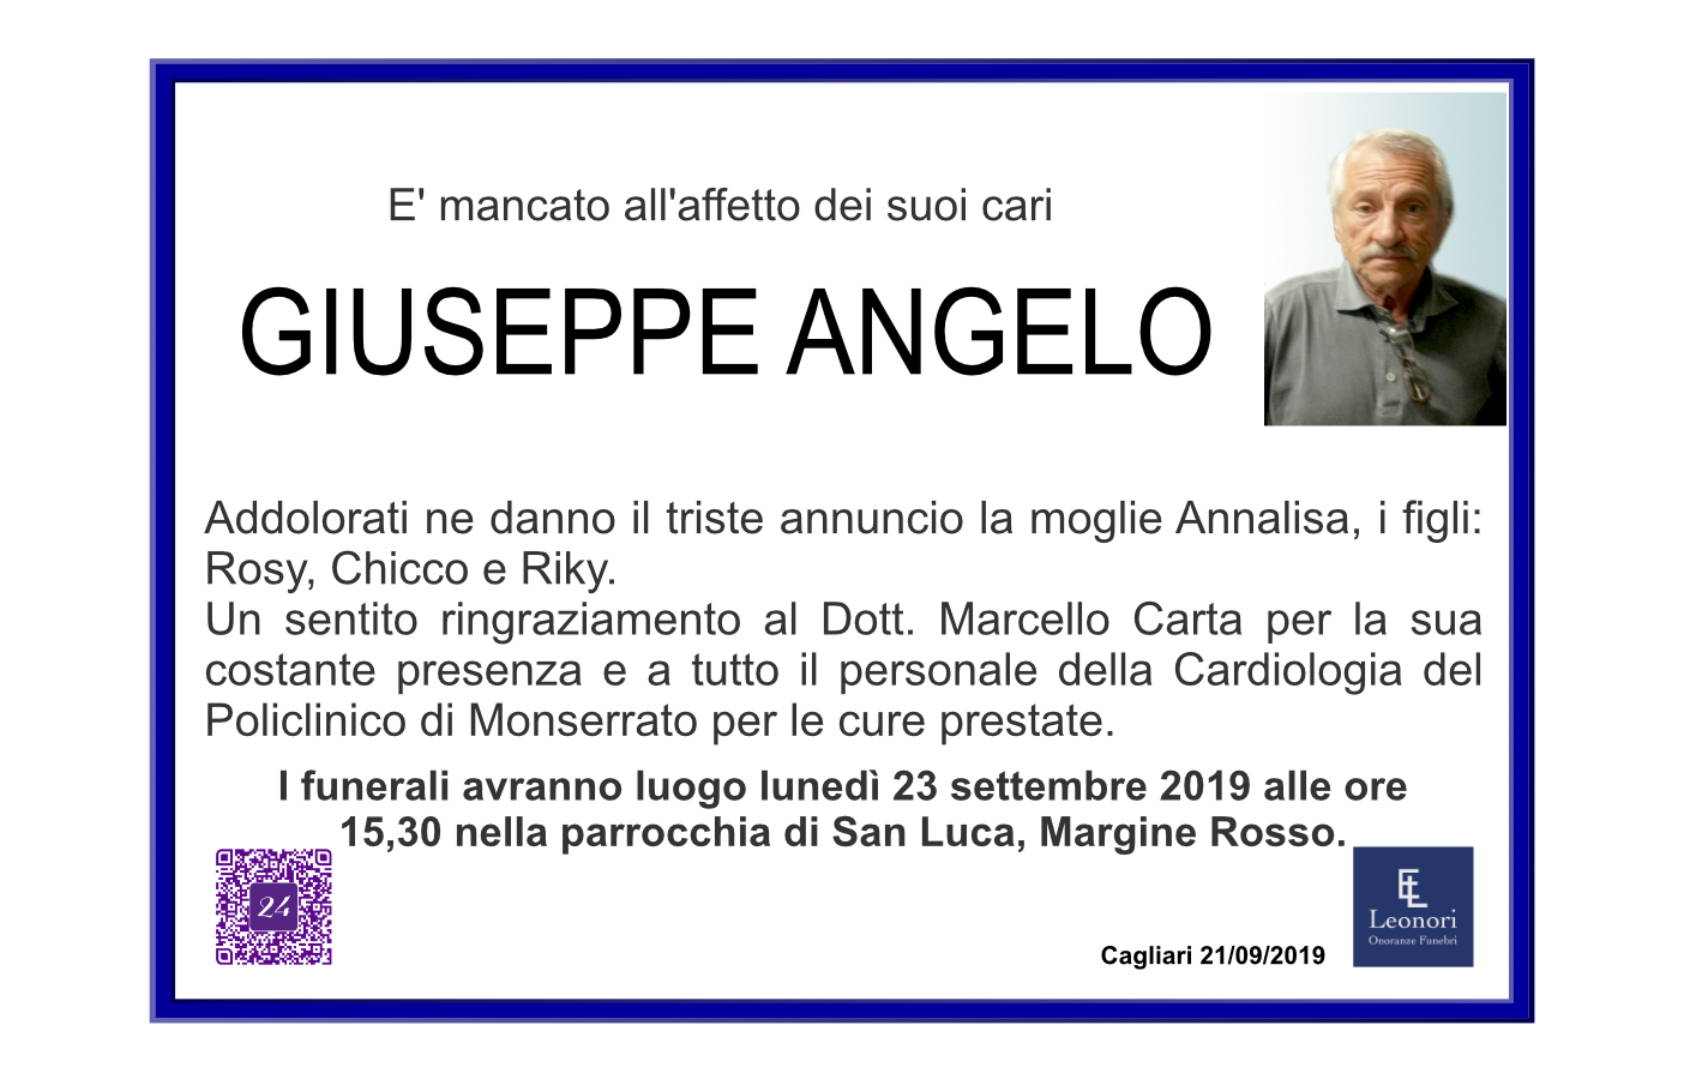 Giuseppe Angelo